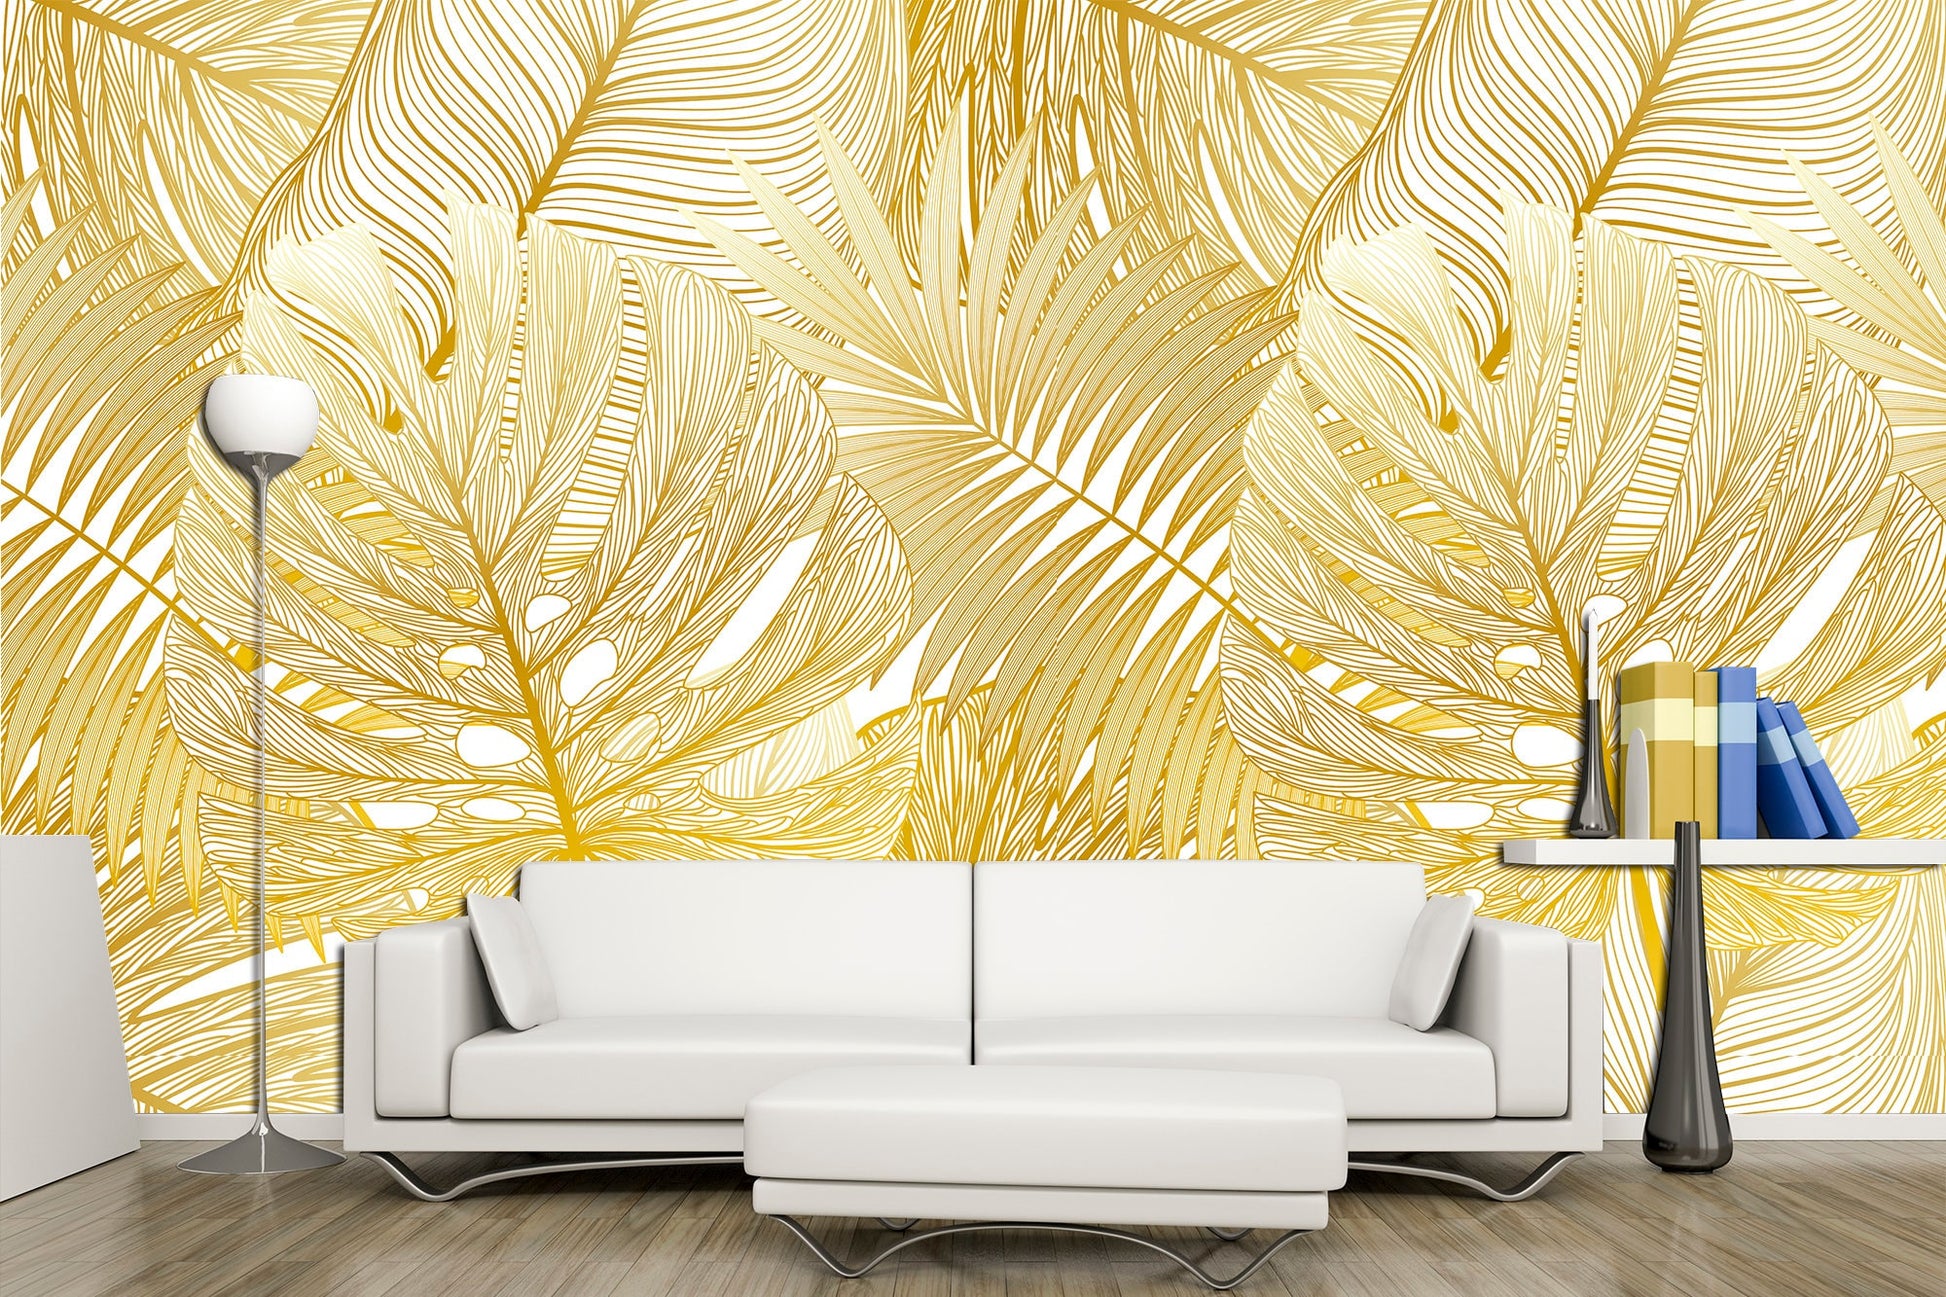 Luxury wall art Removable wallpaper Gold wall decor, Peel stick wallpaper Gold wall art Wallpaper mural Art deco wallpaper